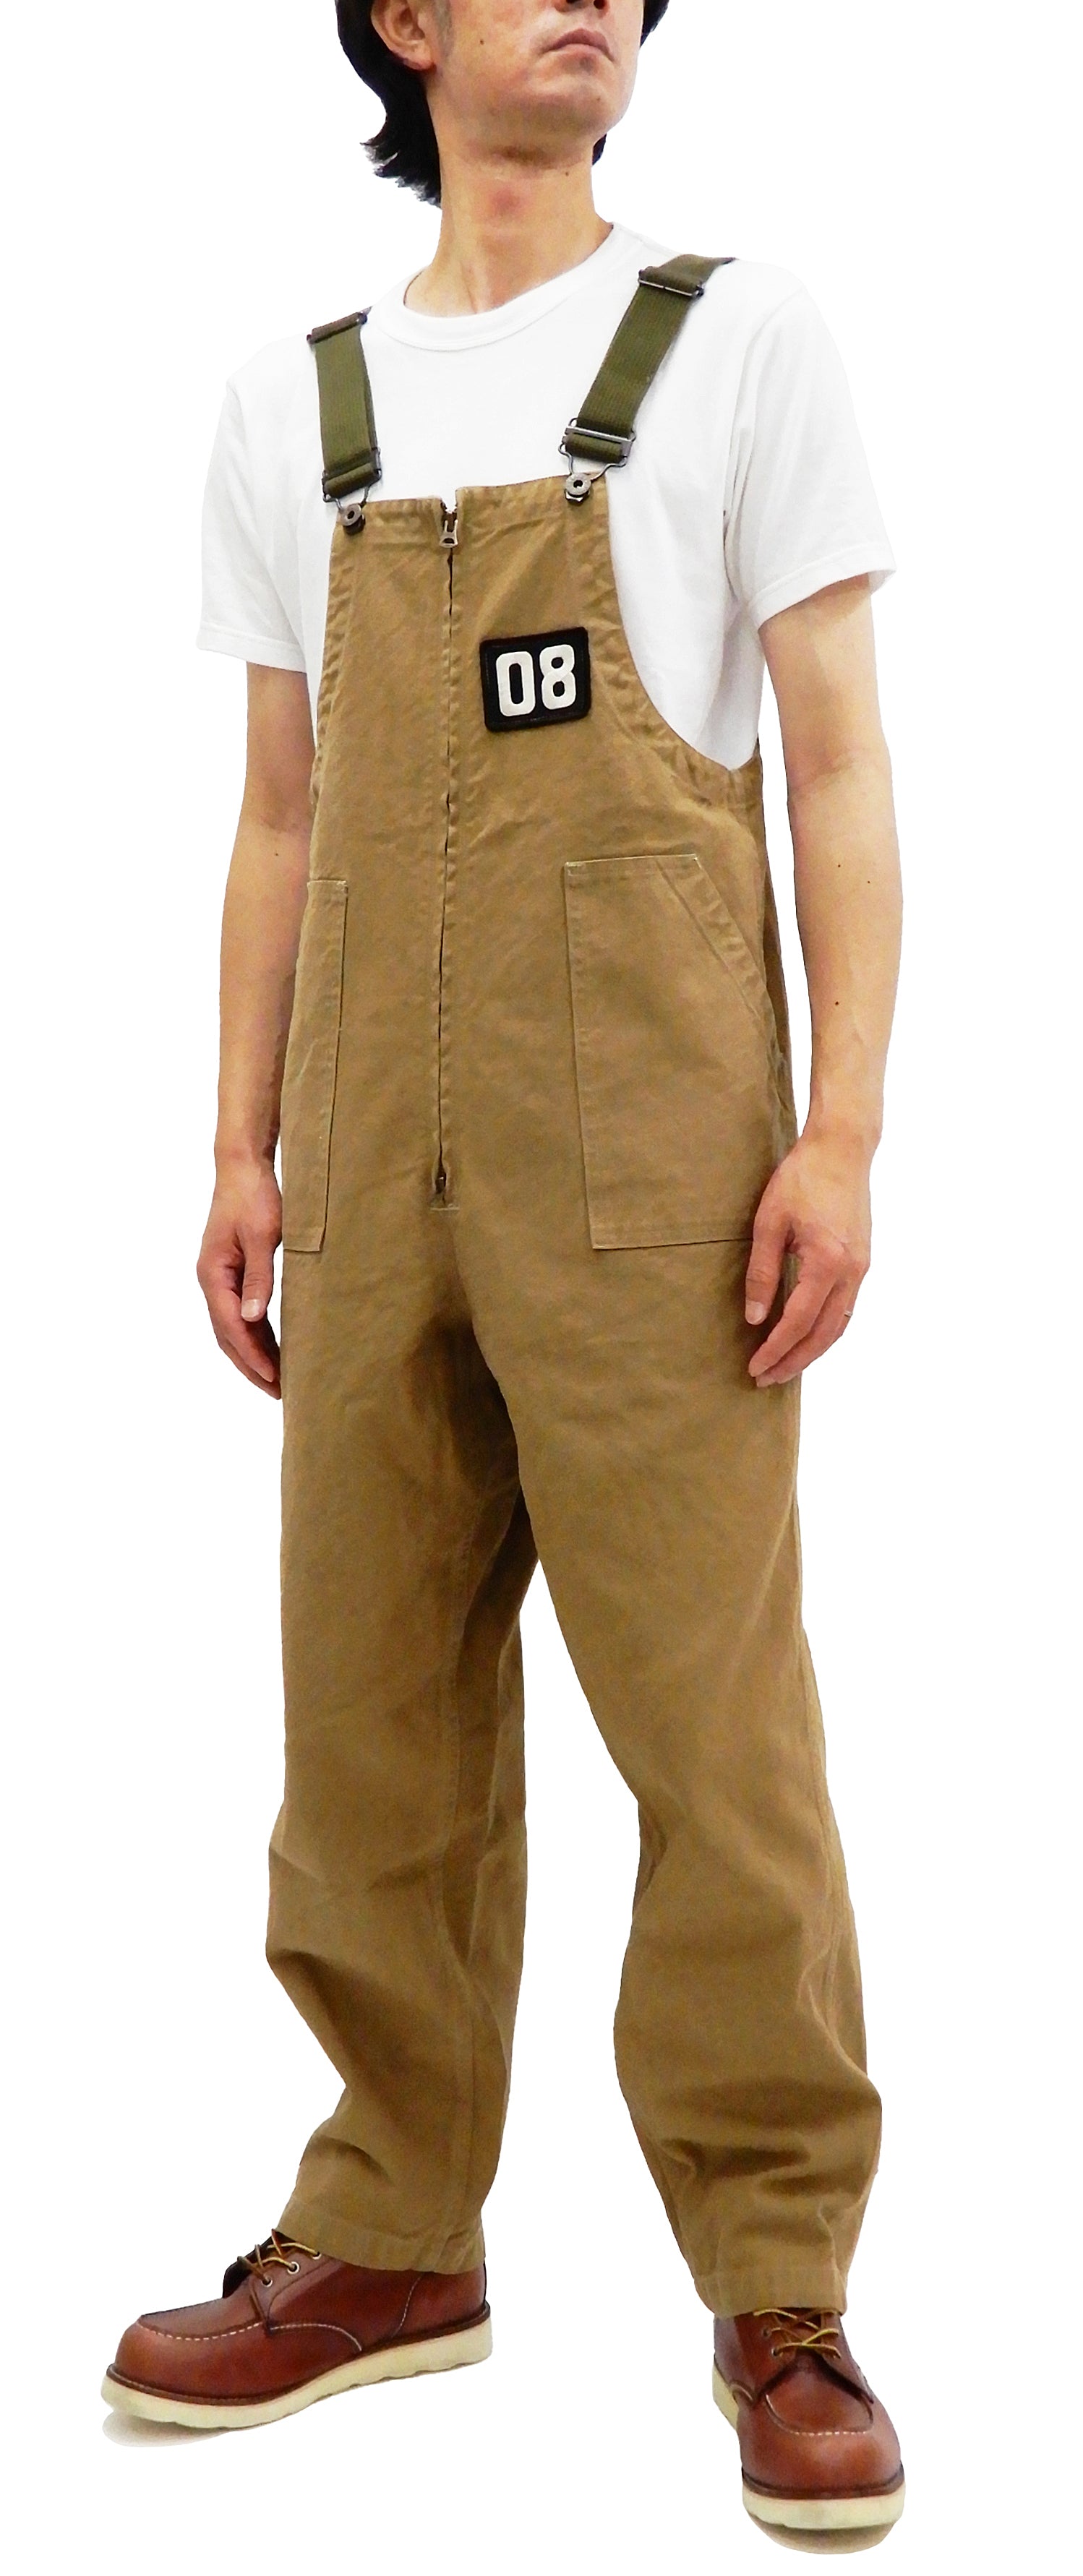 Pherrow's Mens Bib Overall U.S.Navy Deck Pants Military Style Overalls ...